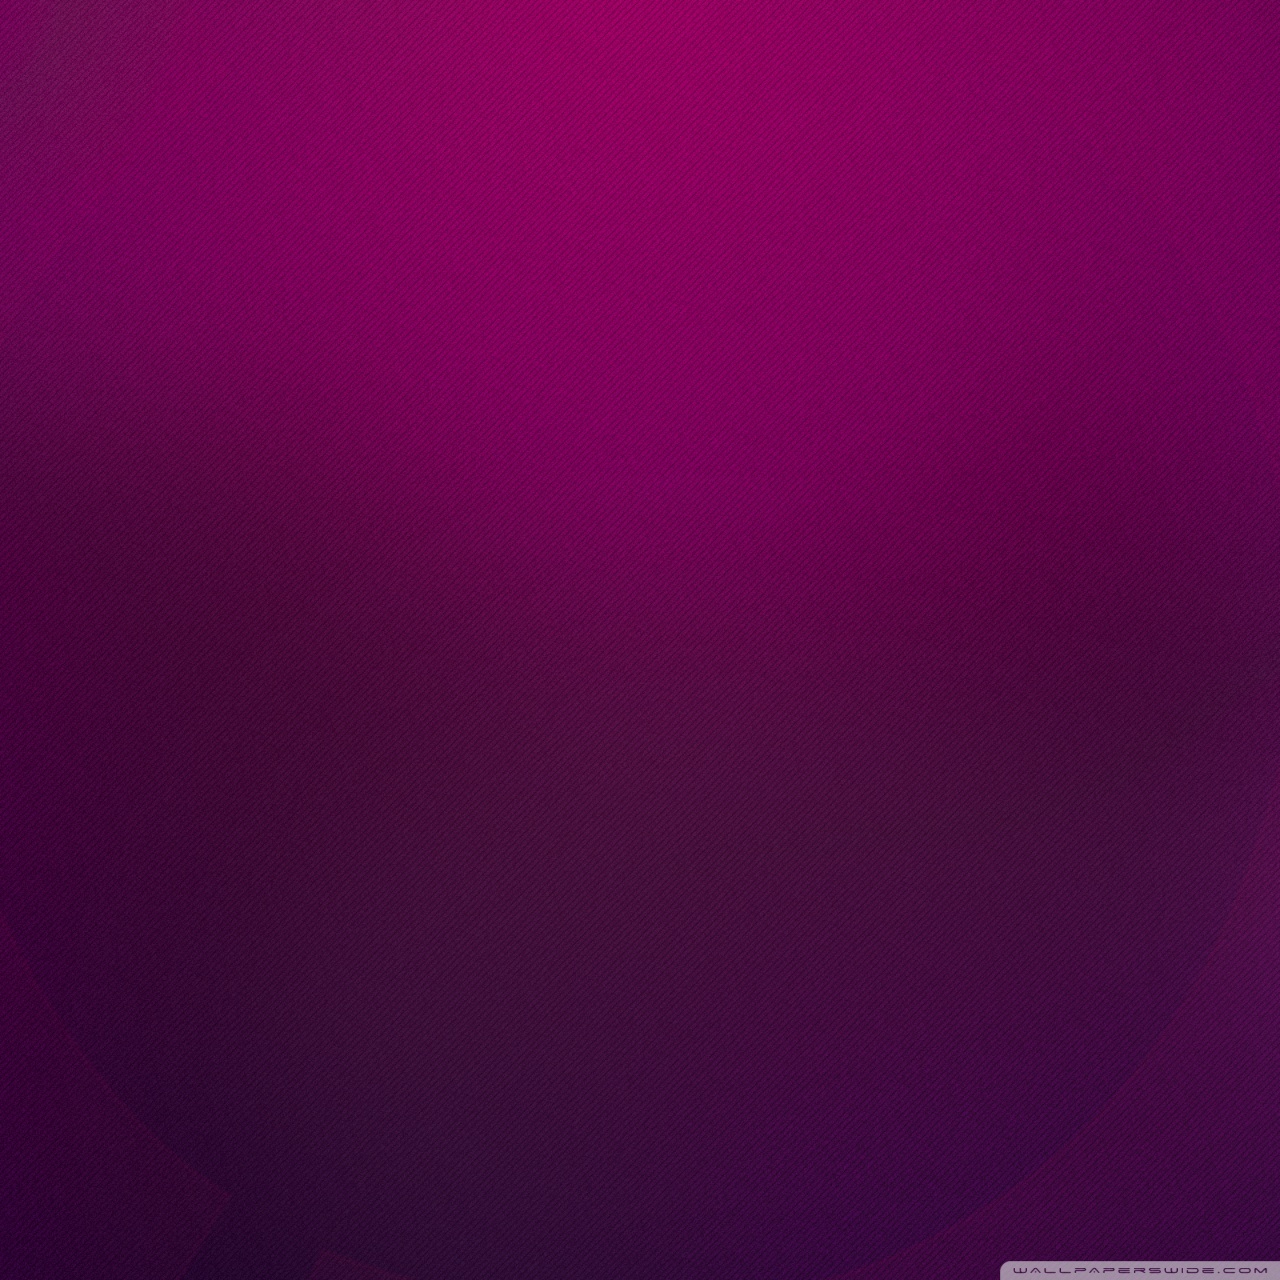 android用の無地の壁紙,バイオレット,紫の,赤,ピンク,ライラック